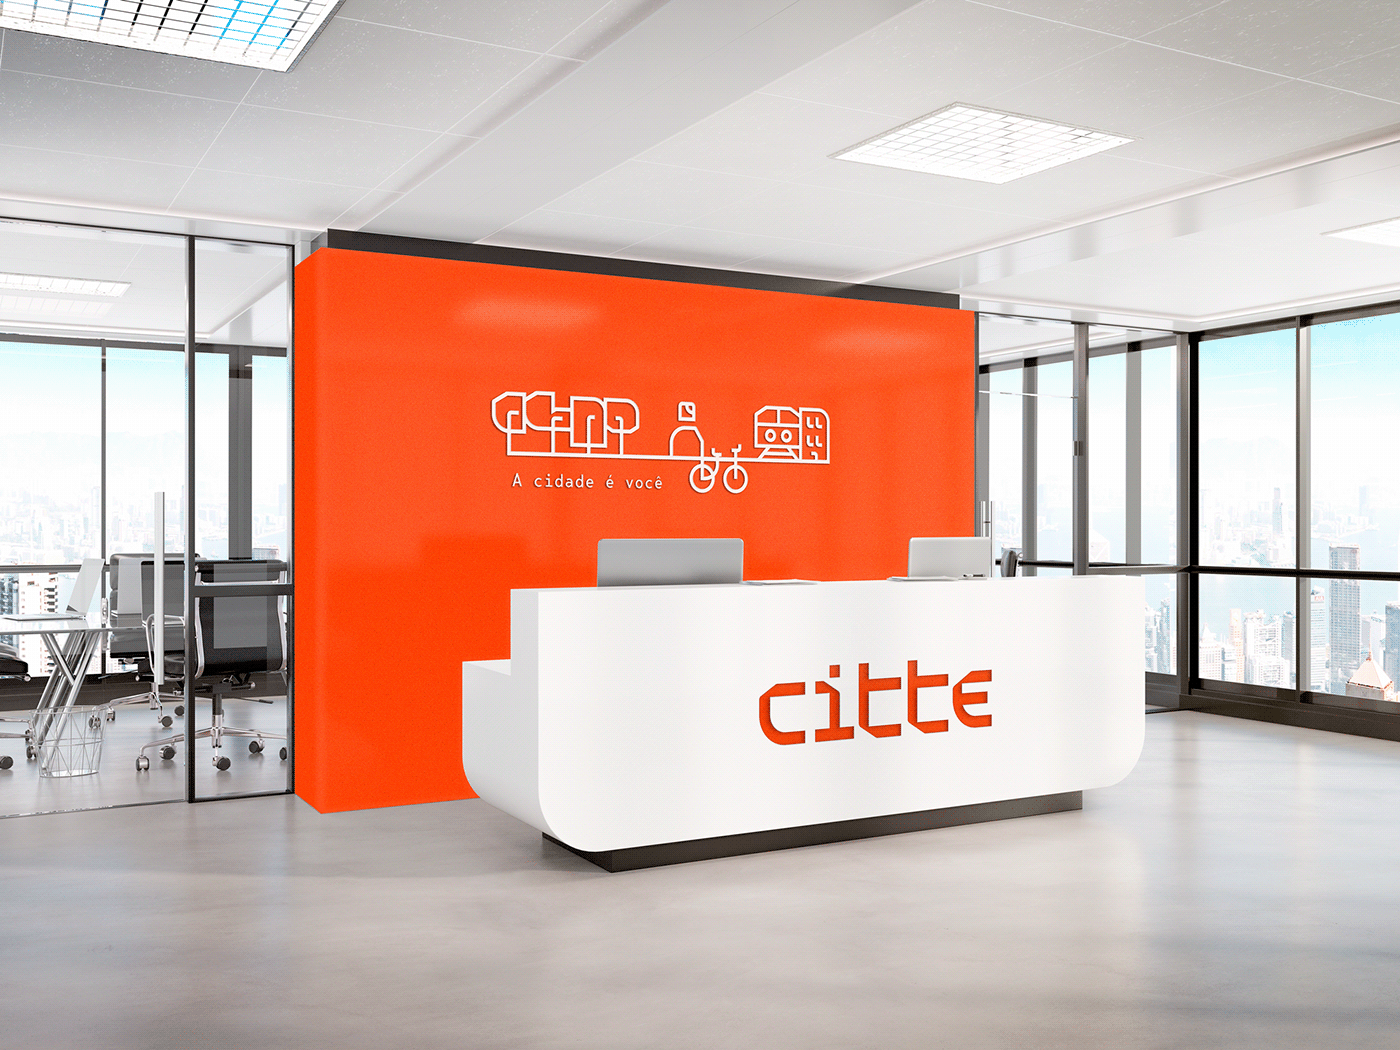 Citte城市服务管理机构视觉识别设计